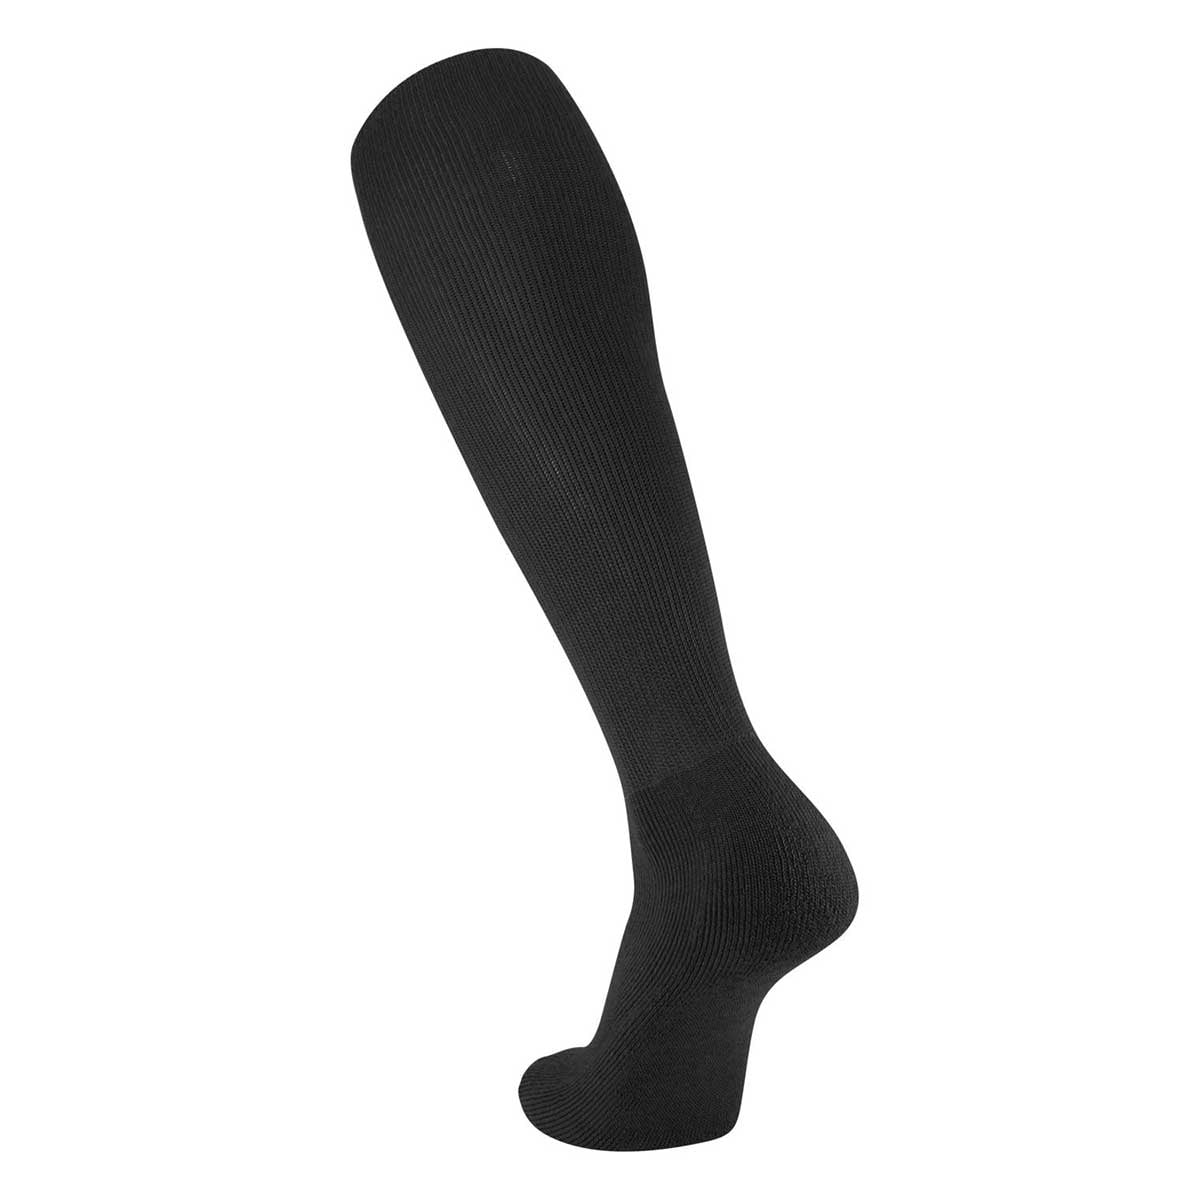 Rawlings Easton Baseball/Softball Socks, Black, Tball Size